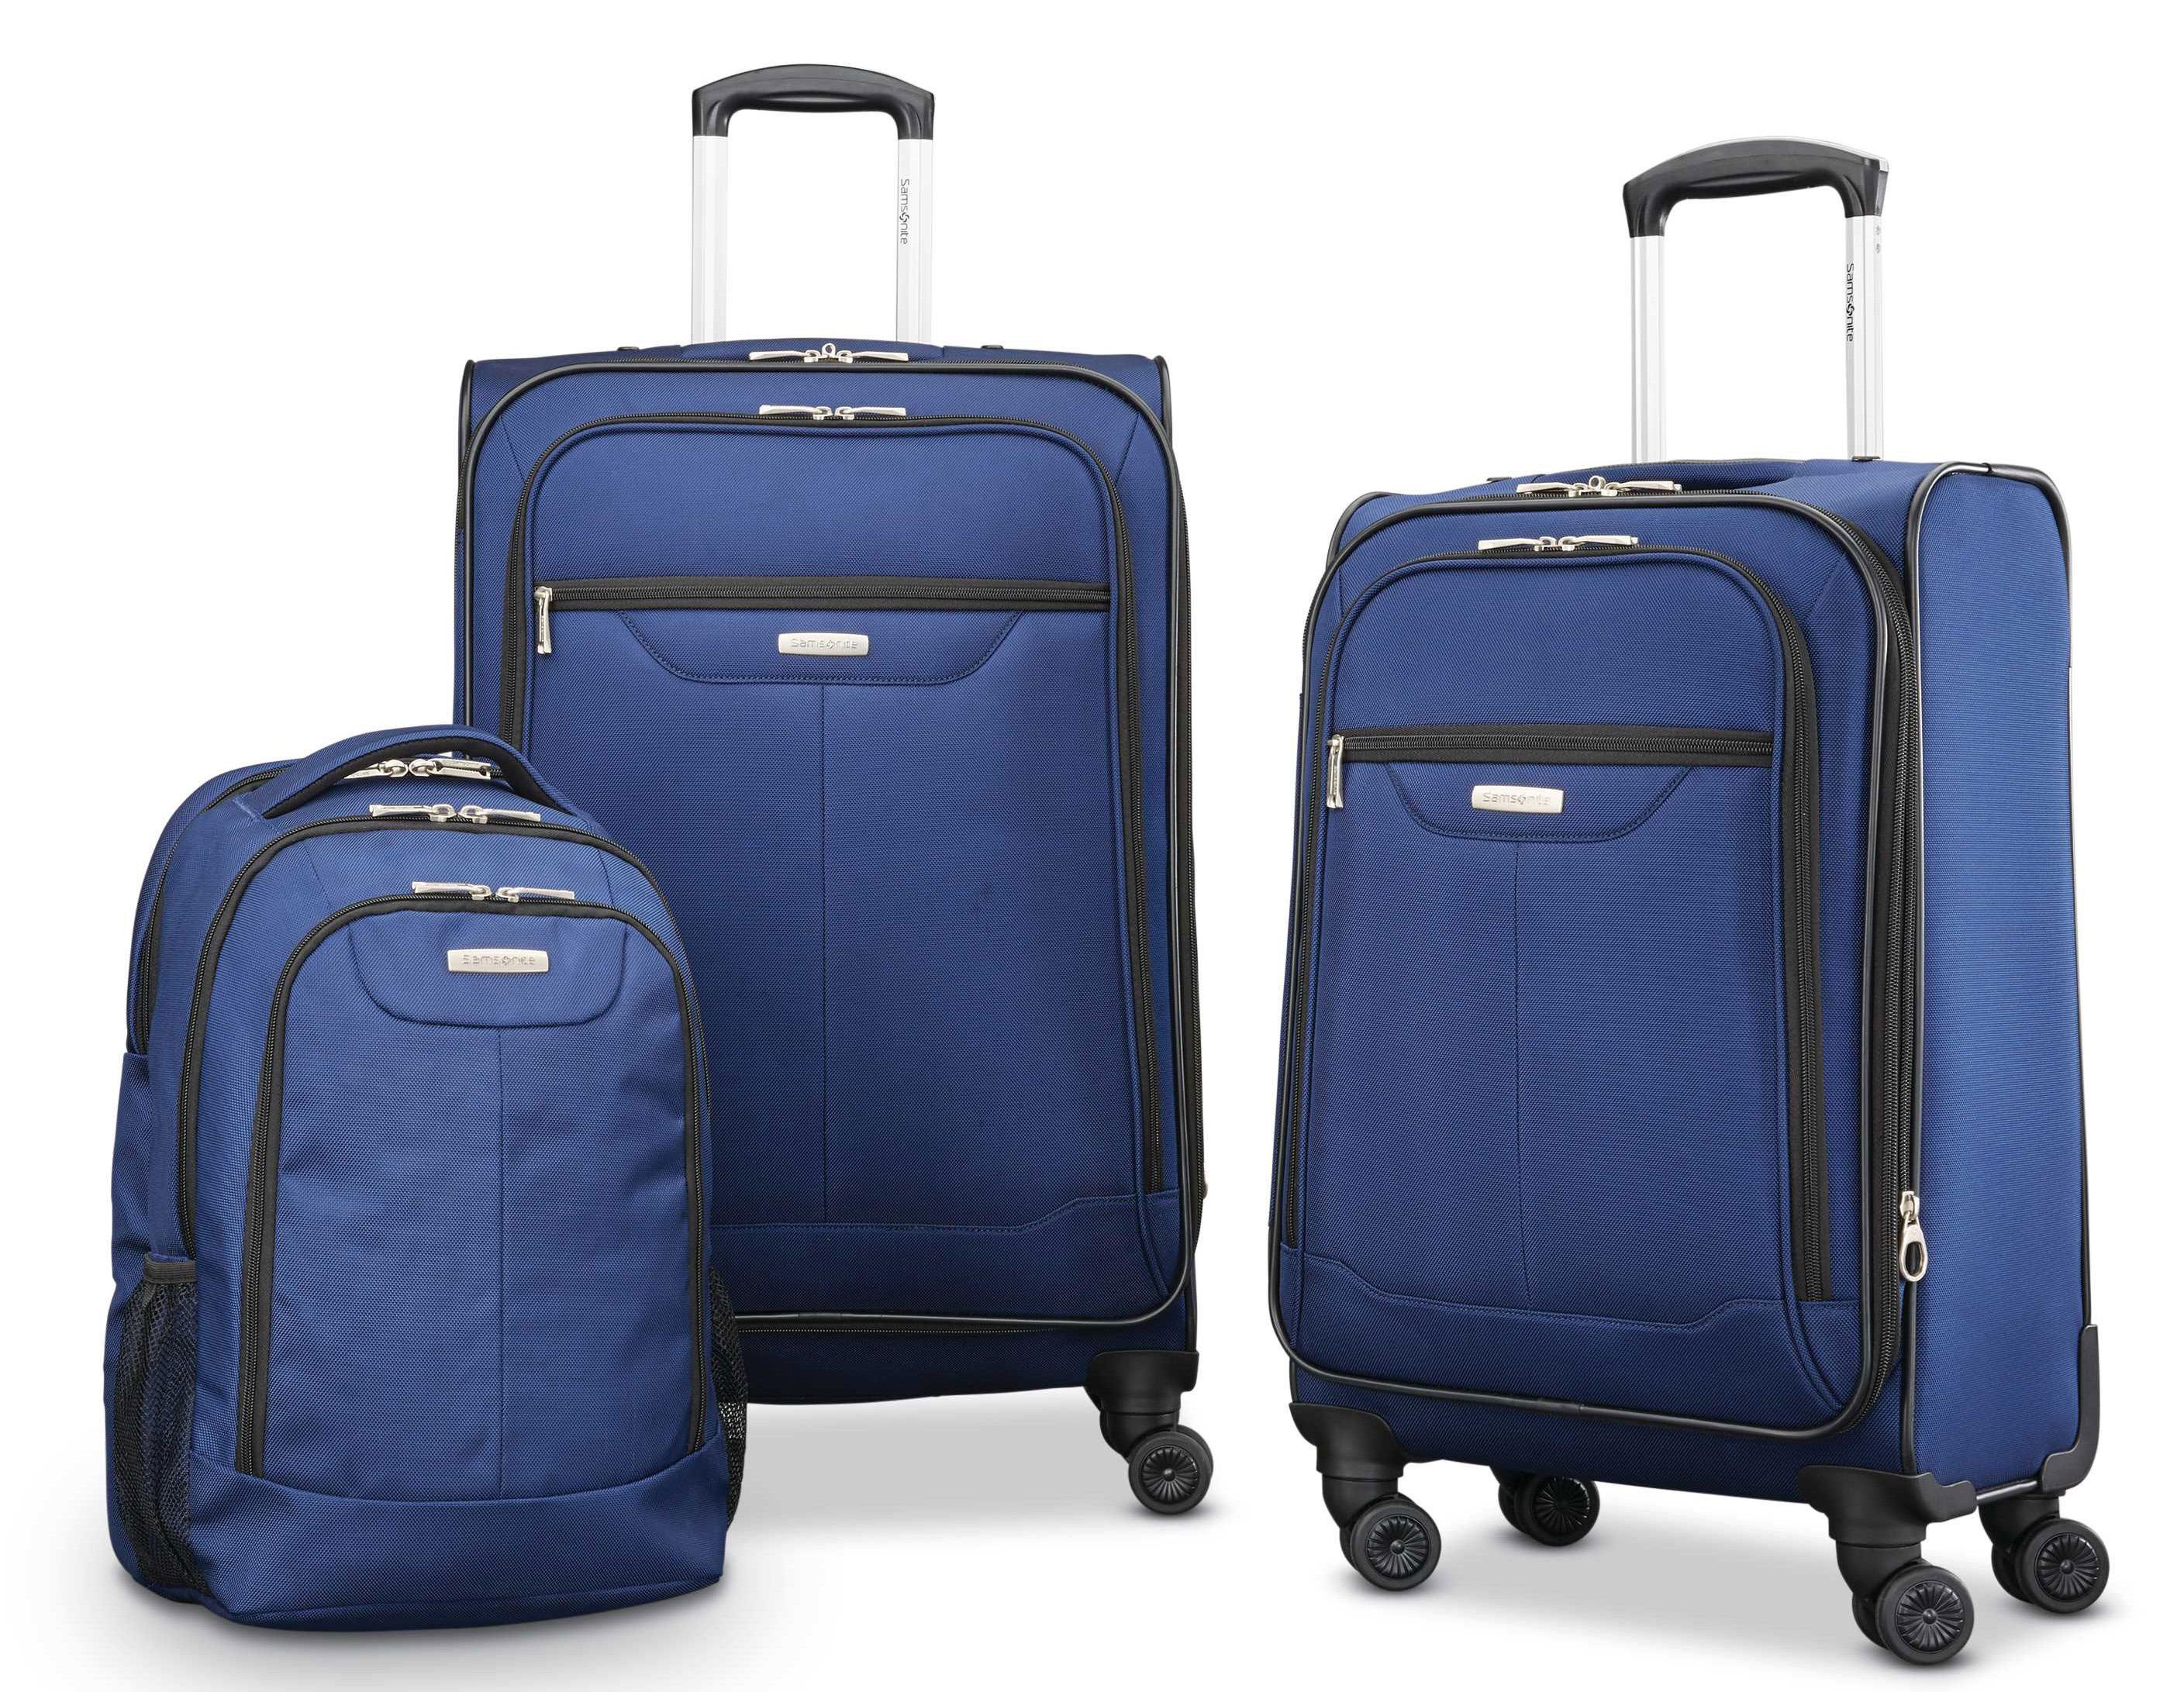 Samsonite Tenacity 3 Piece Softside Luggage Set for $129.99 Shipped